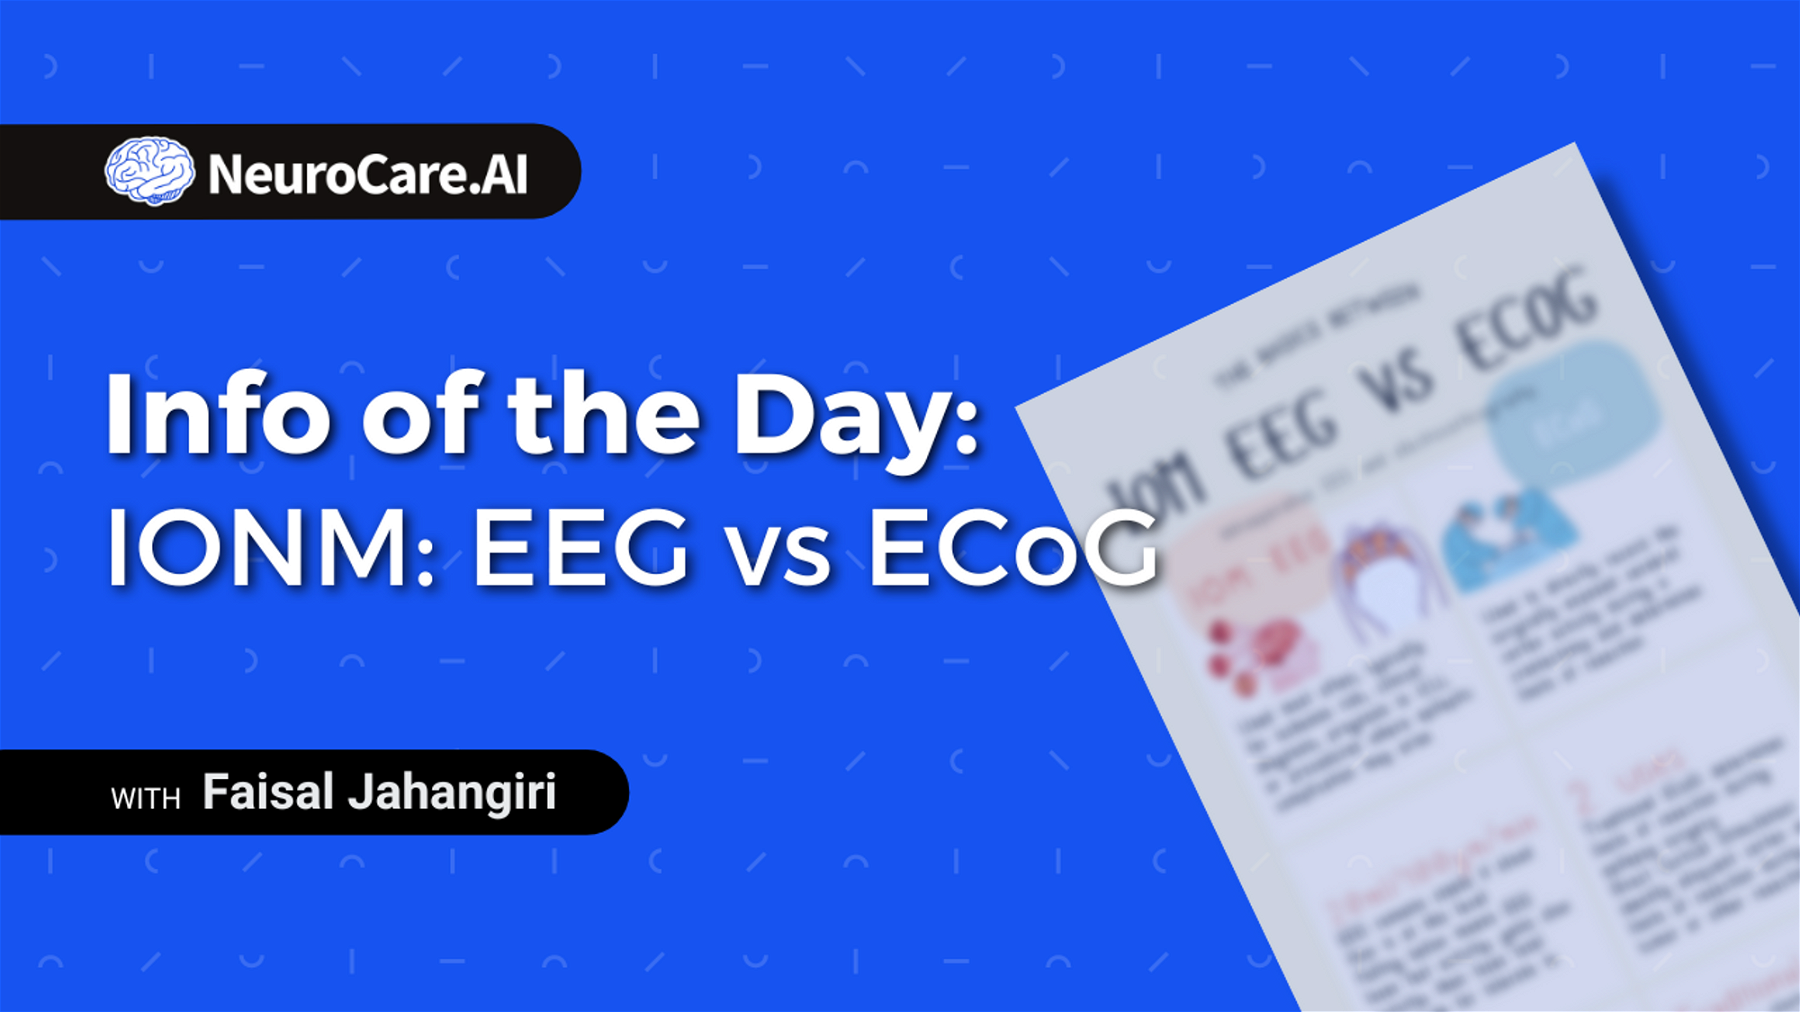 Info of the Day: "IONM: EEG vs ECoG"